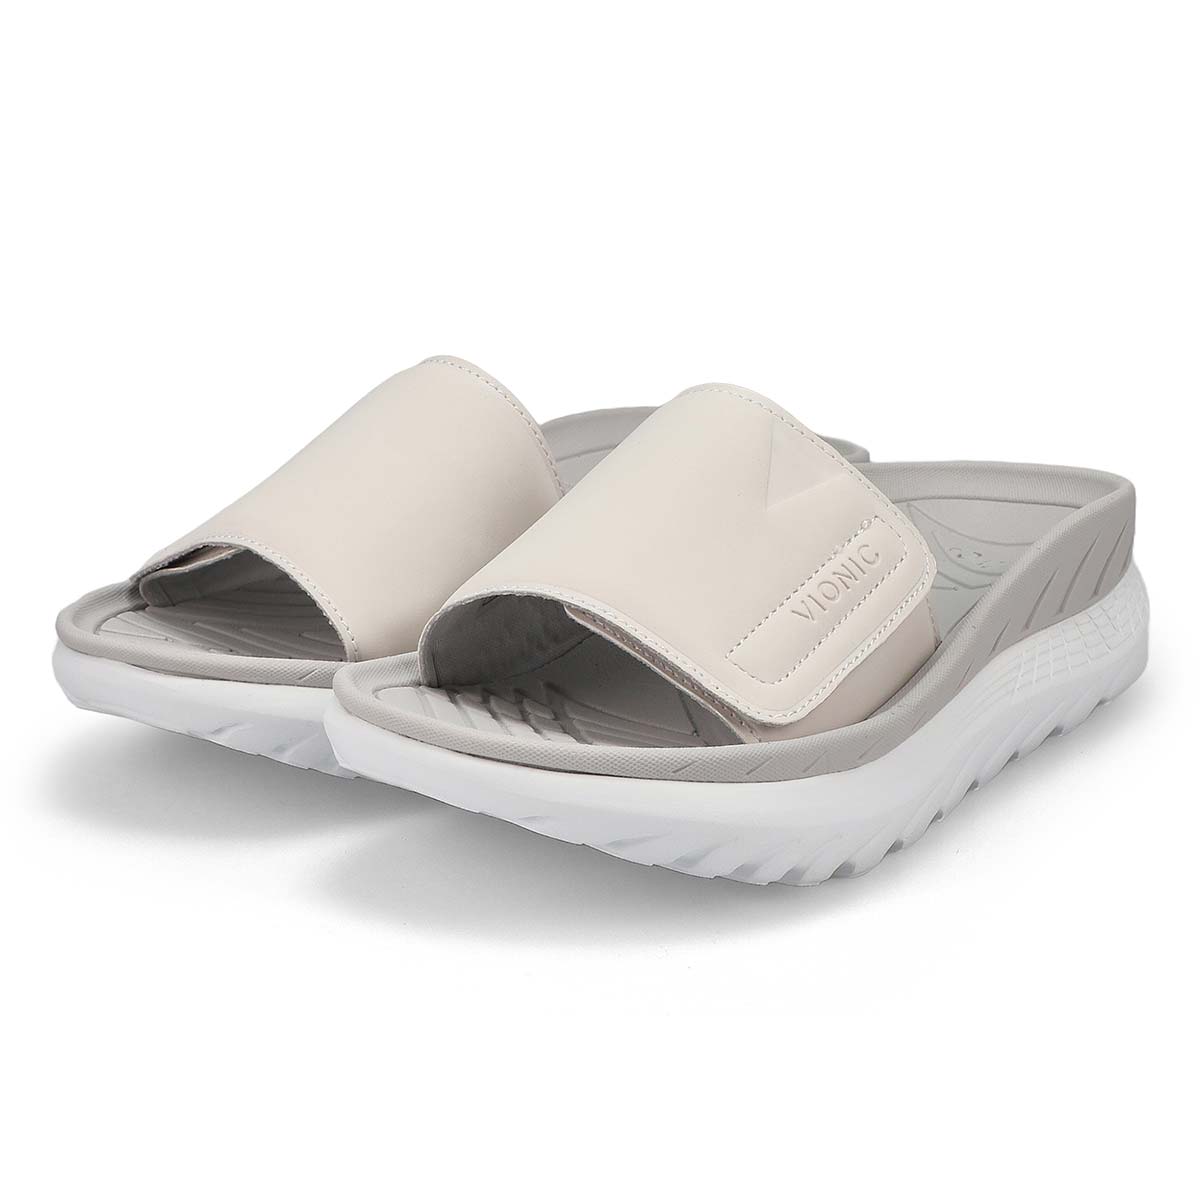 Ladies Rejuvenate Platform Slide Sandal - White